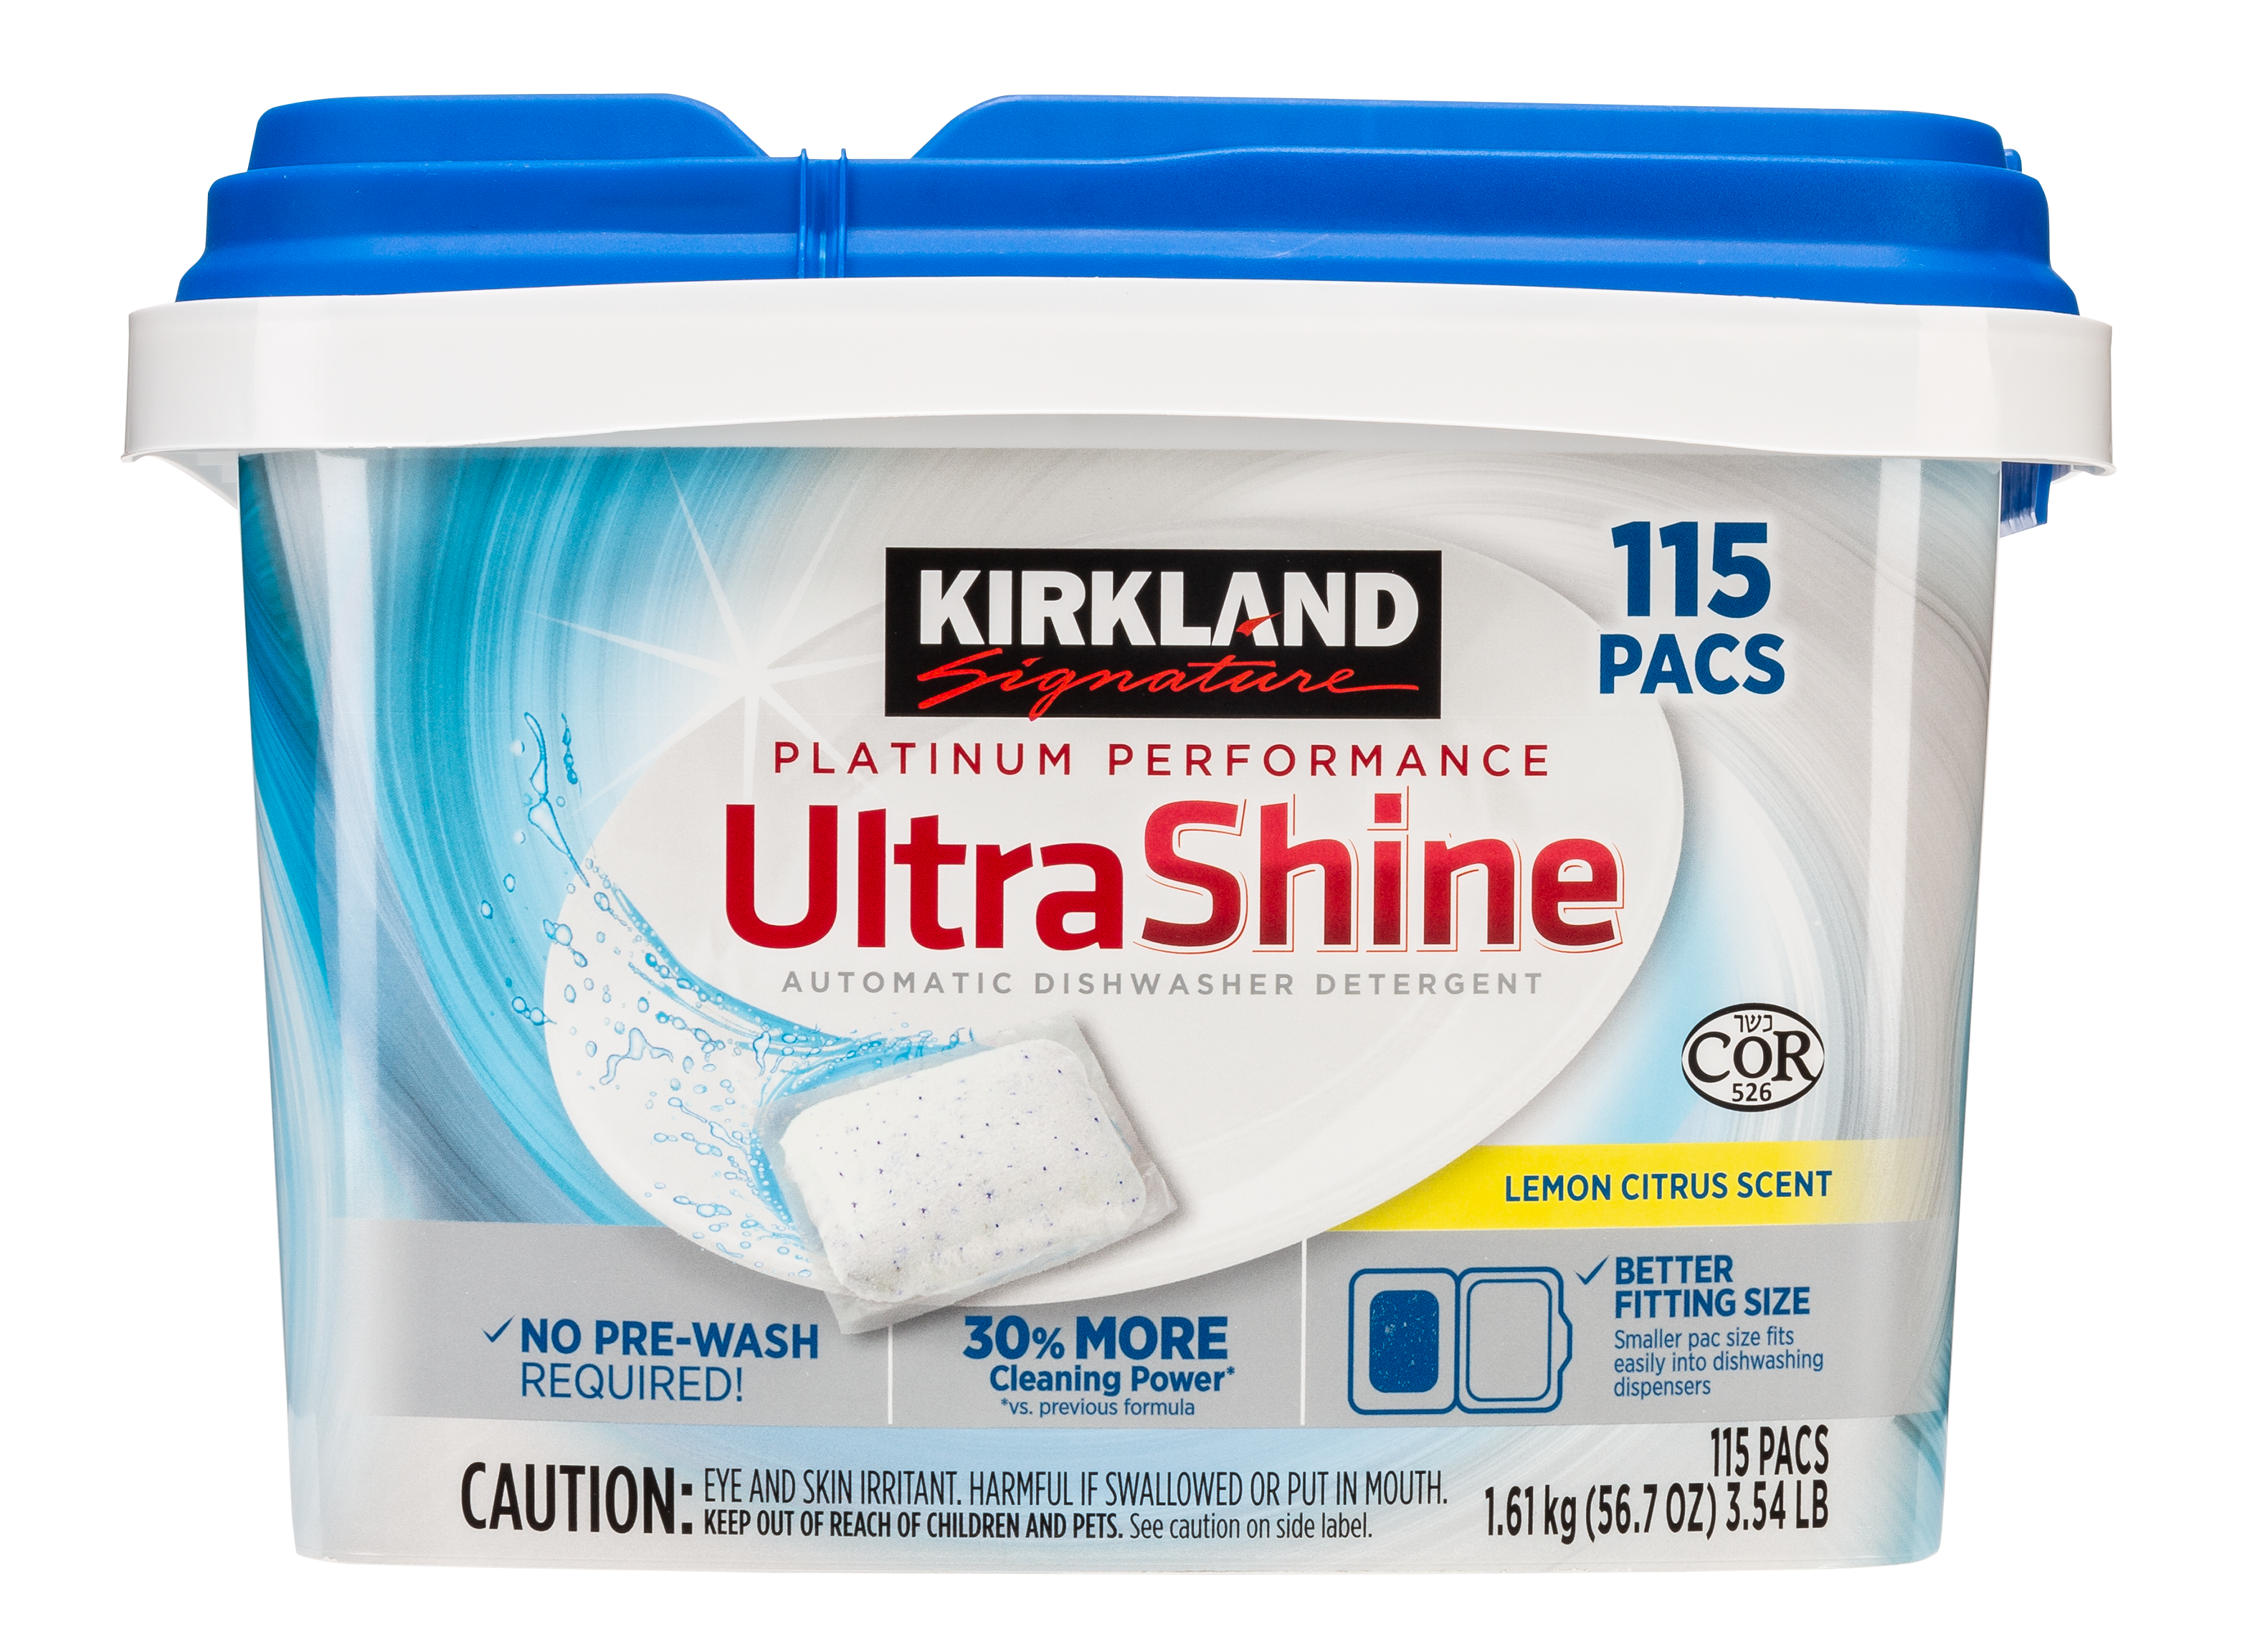 Kirkland Signature (Costco) Platinum Performance UltraShine Dishwasher  Detergent Review - Consumer Reports